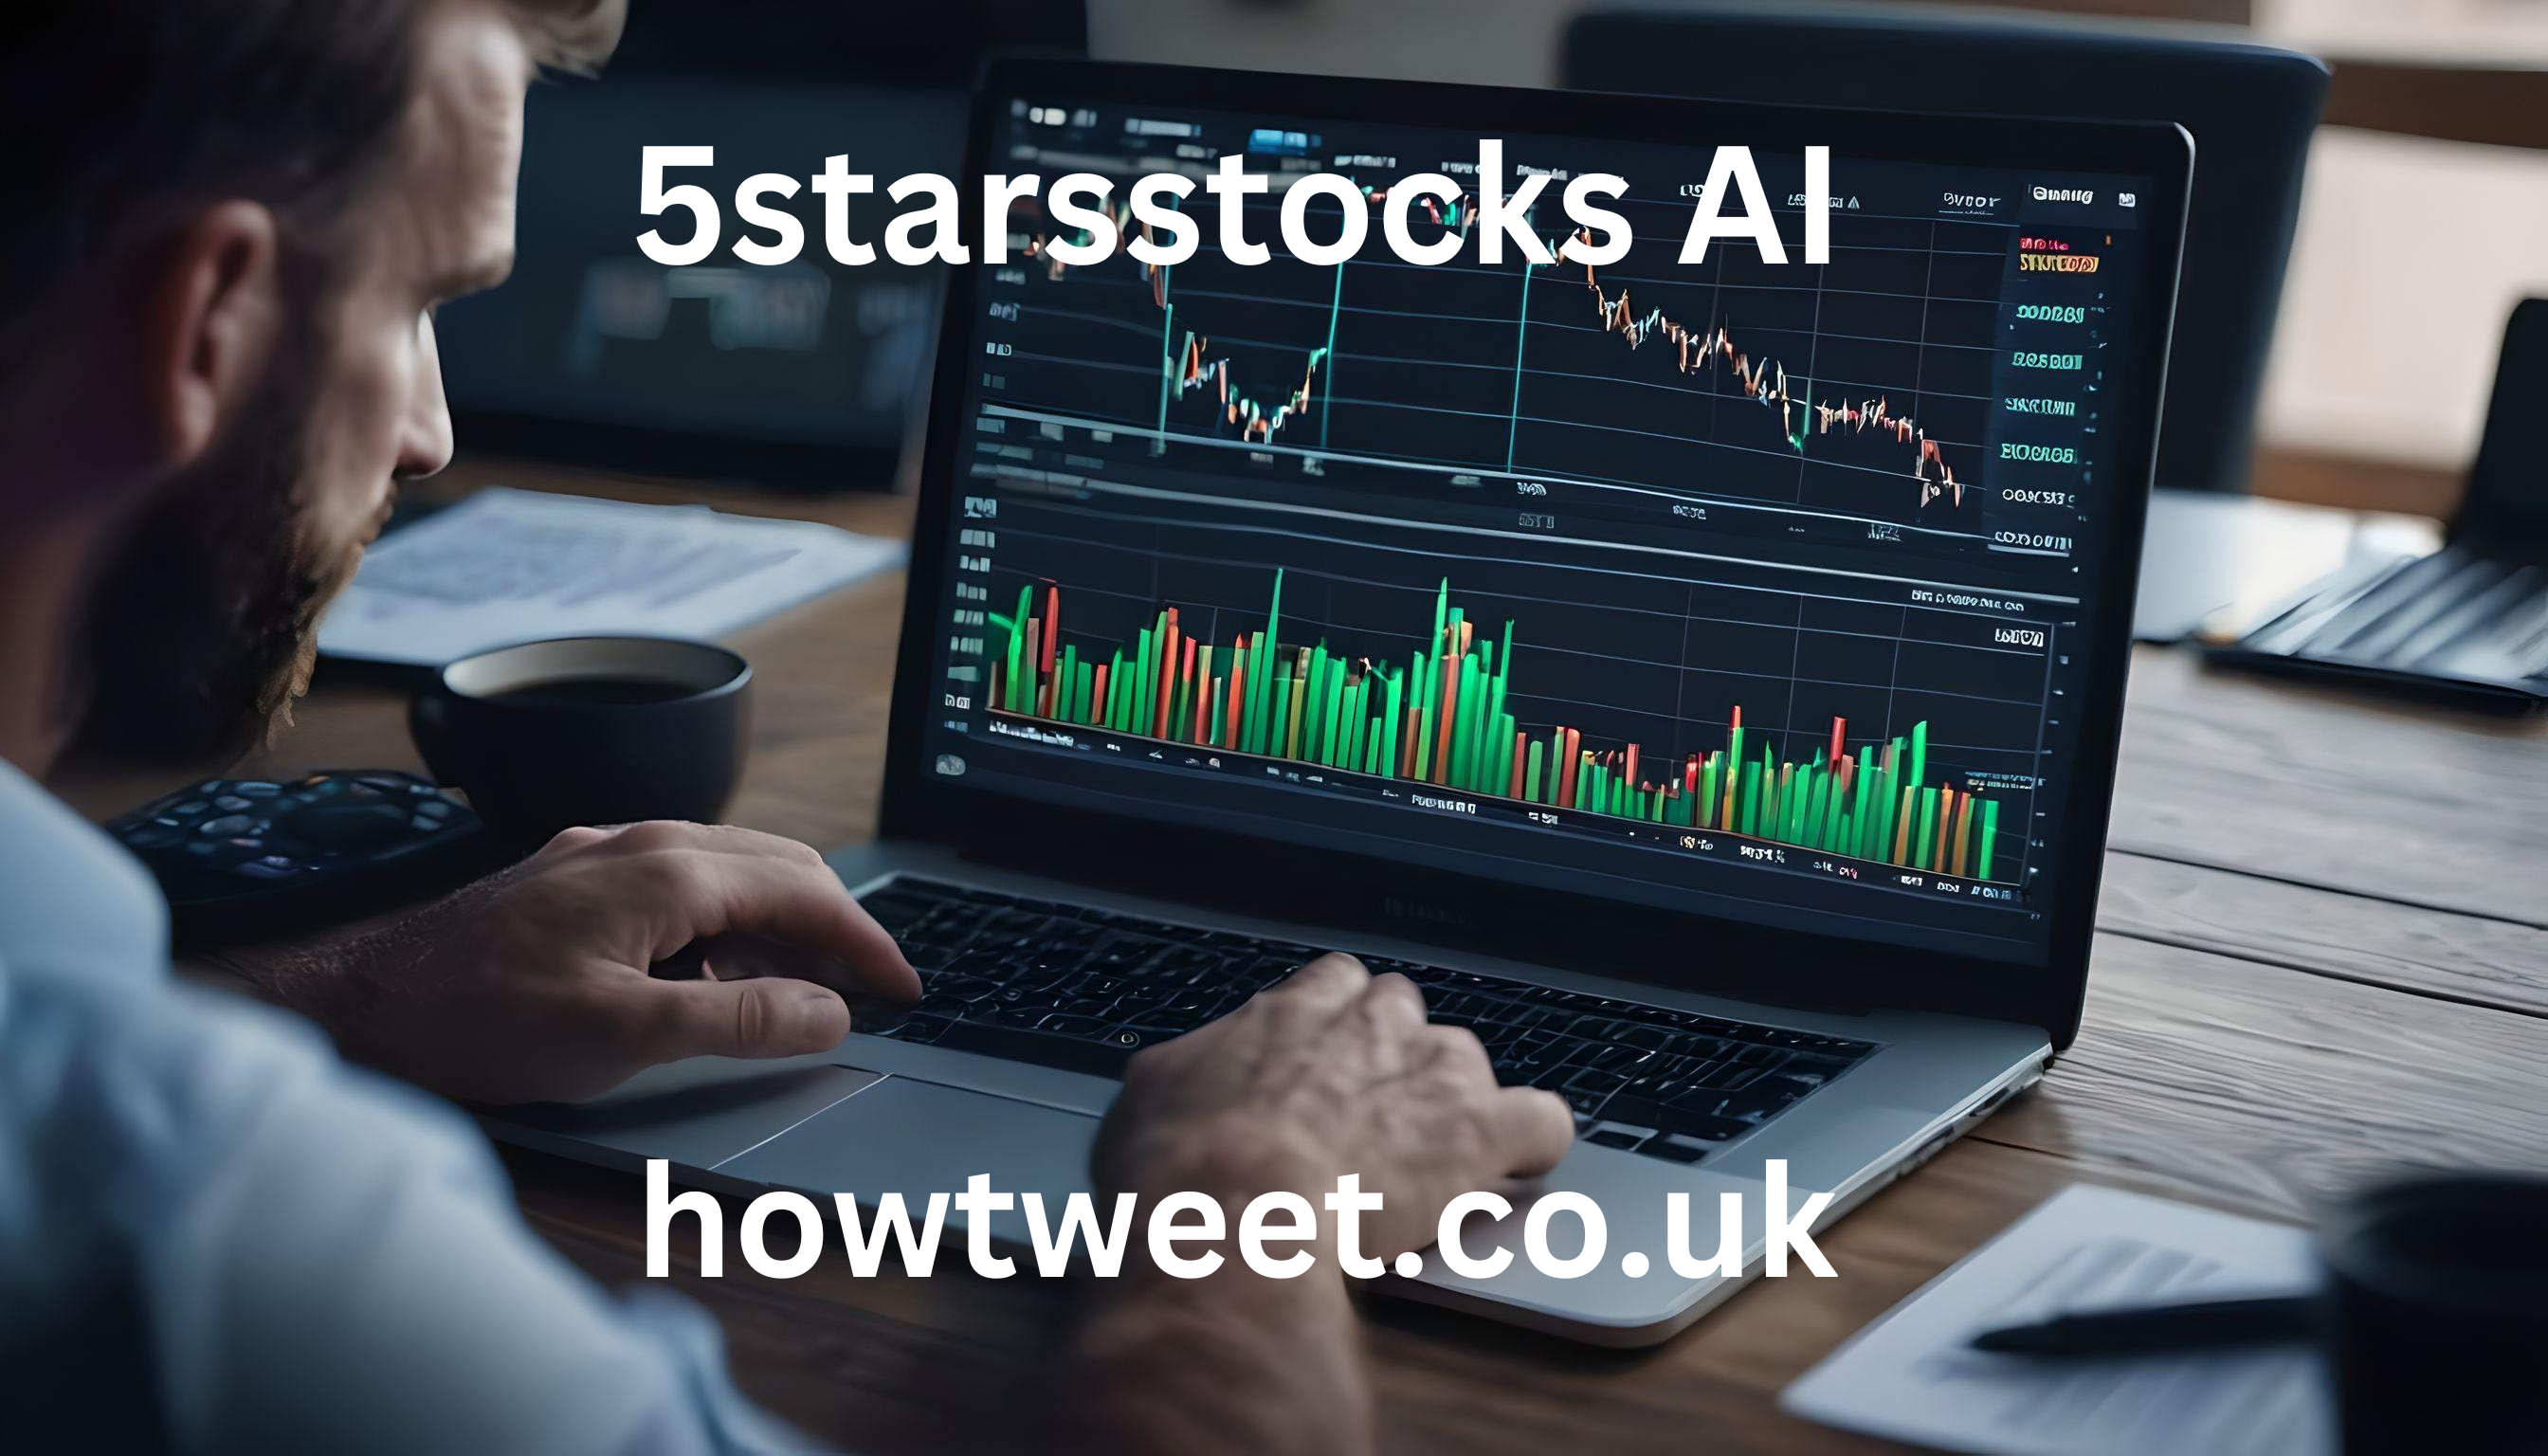 5starsstocks AI